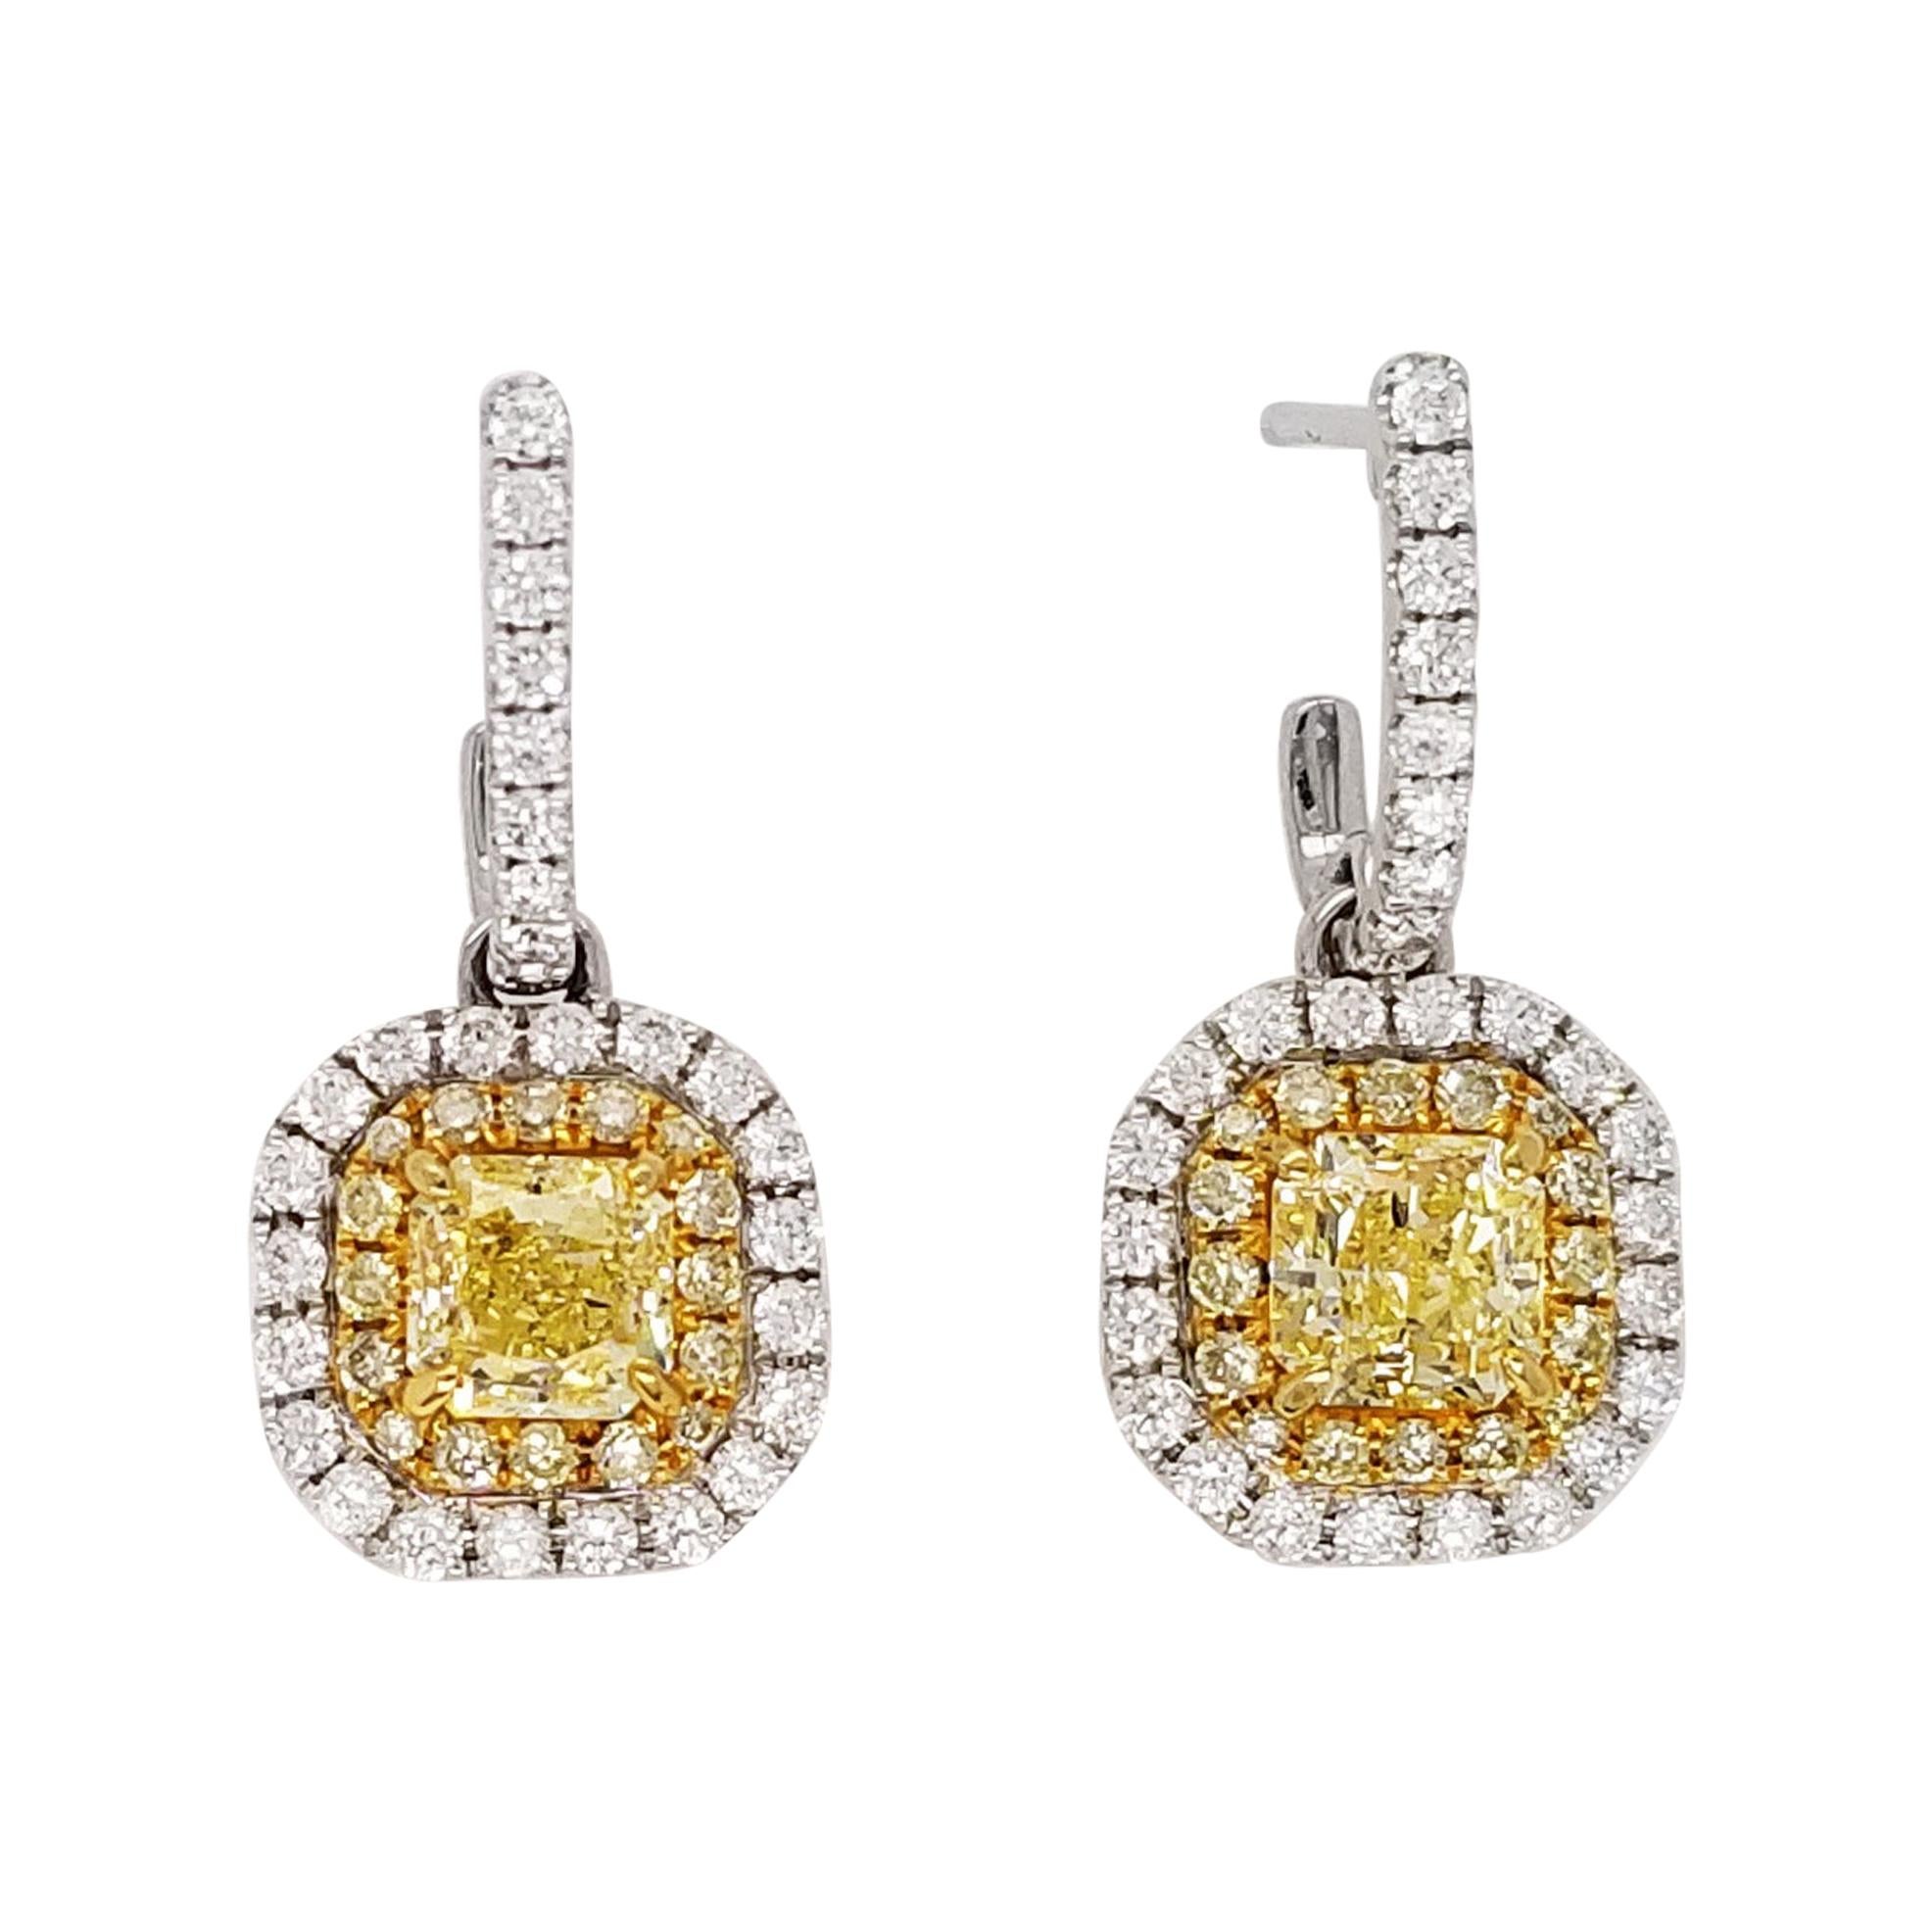 Scarselli Dangle Earrings in Platinum Fancy Yellow Diamonds 0.5 Each, GIA